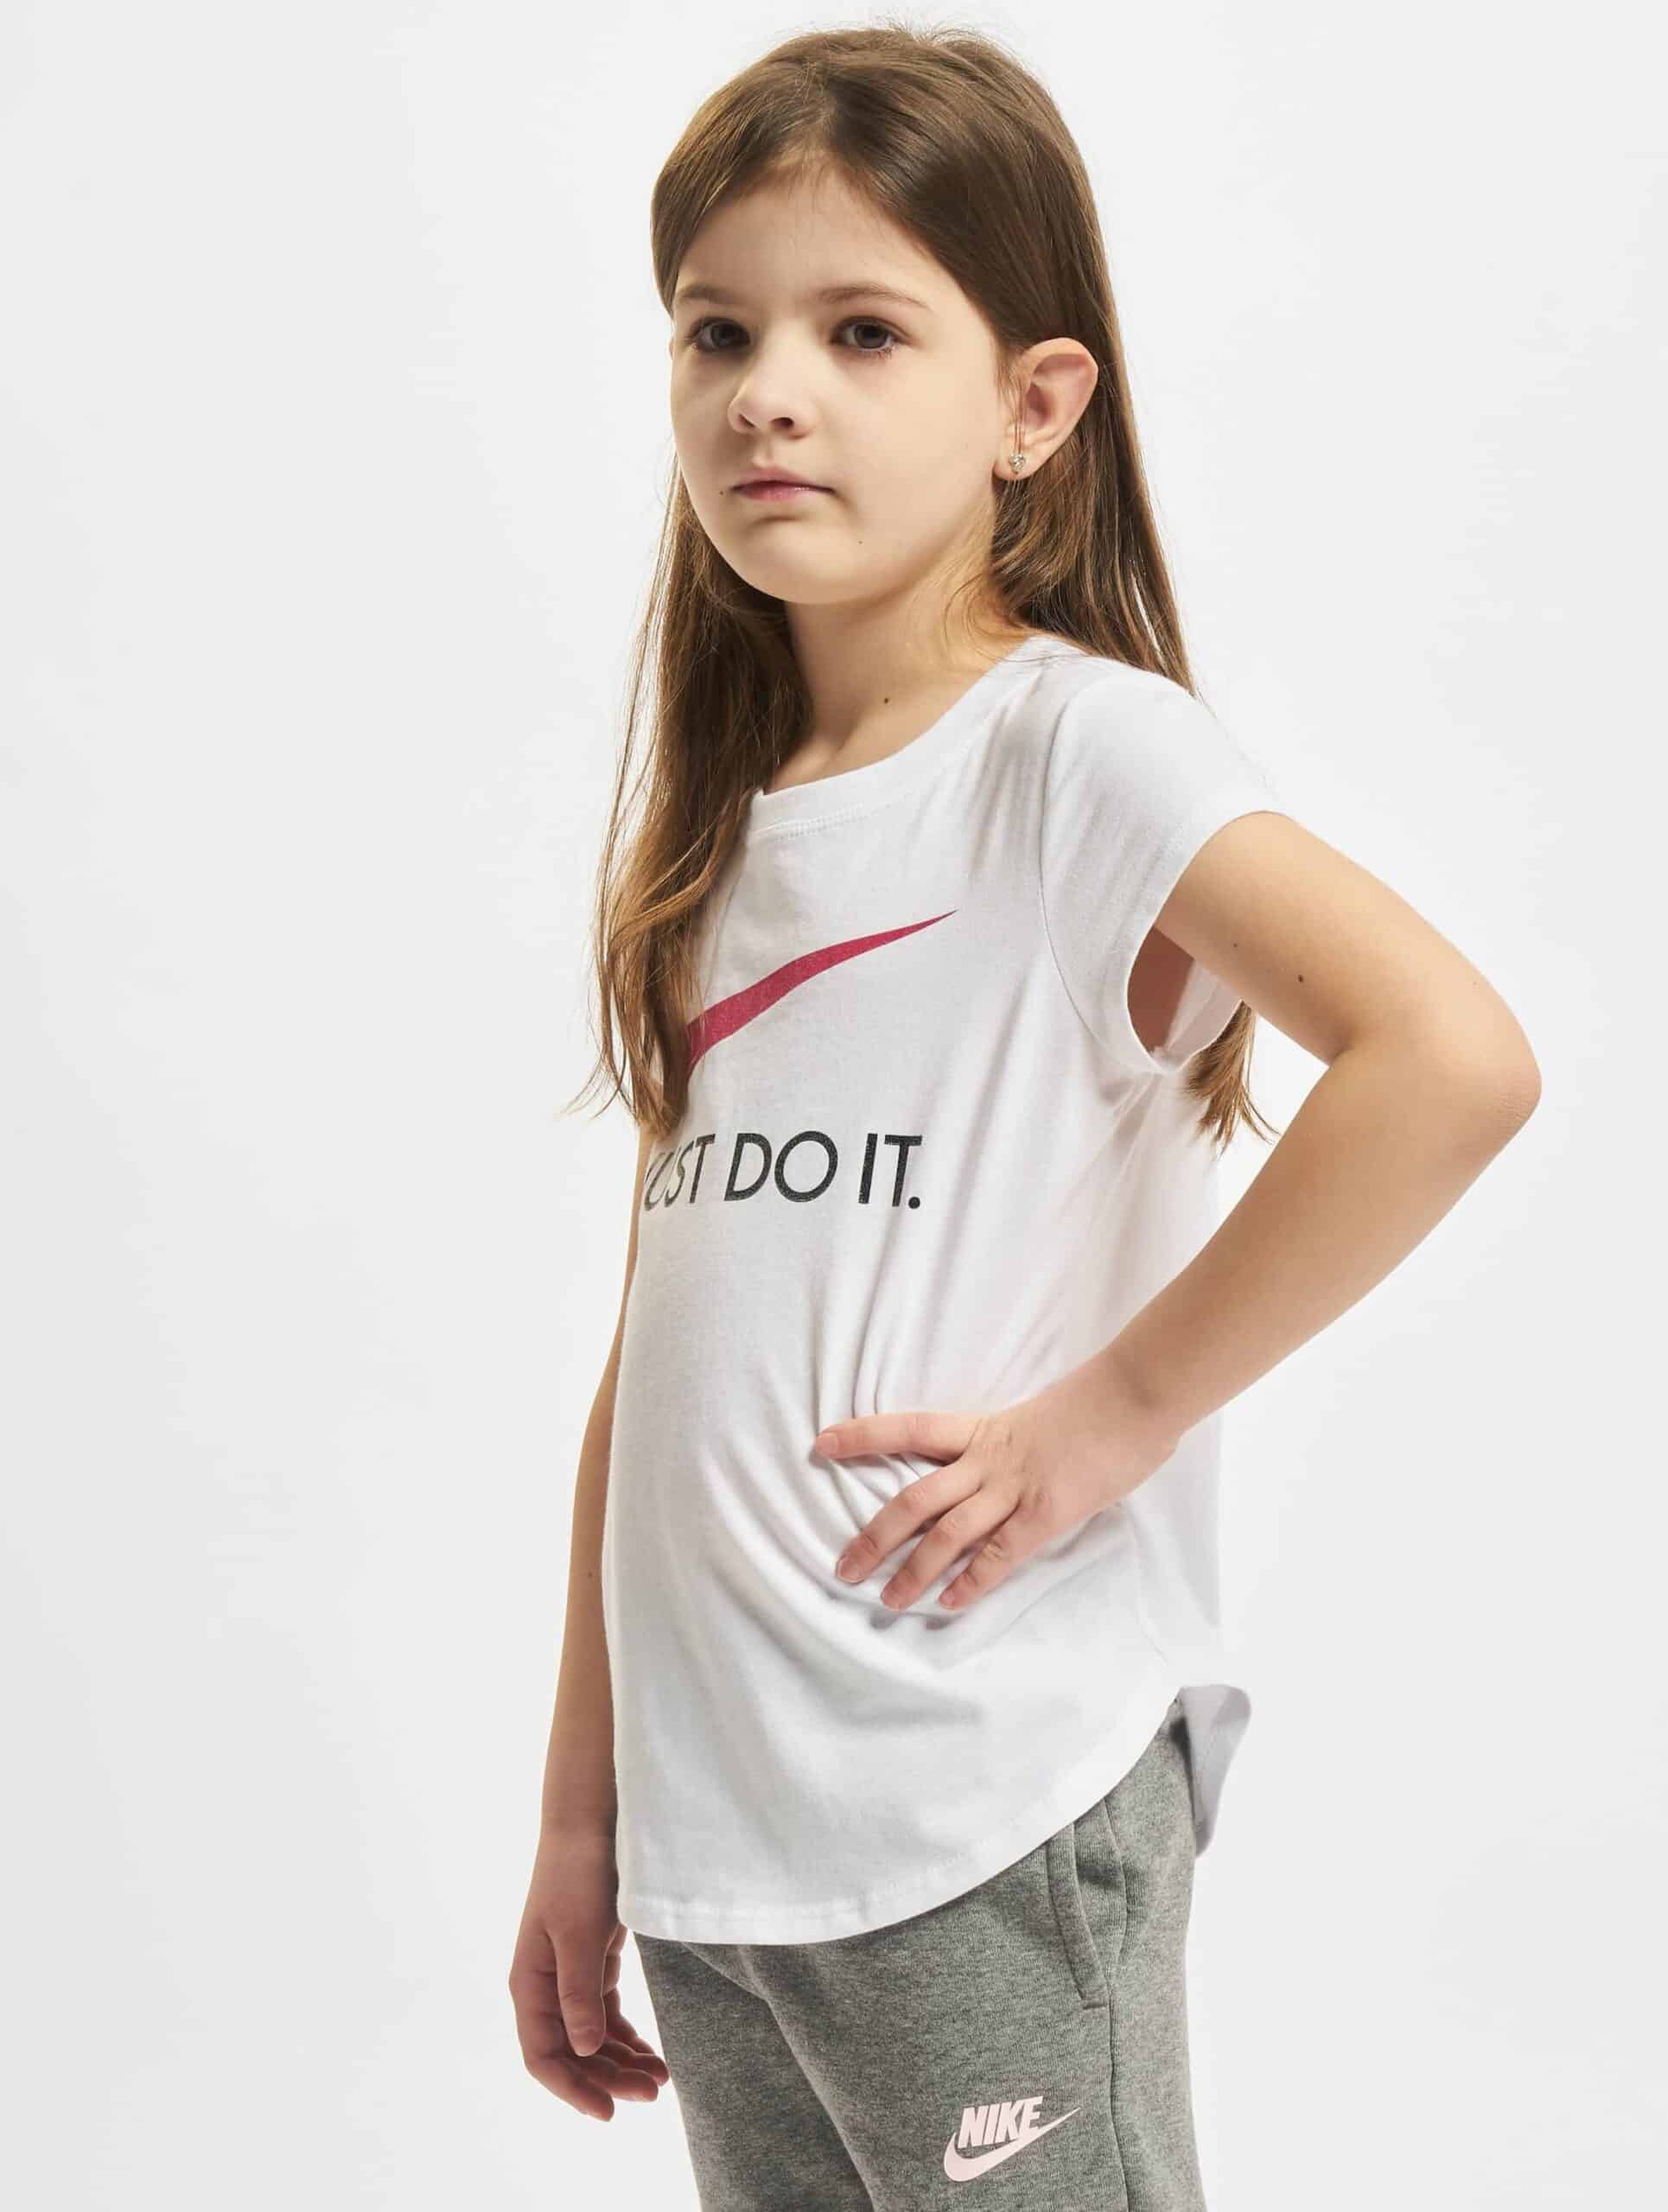 Nike Swoosh JDI T-Shirt Kinder,Unisex op kleur wit, Maat 67_YEARS